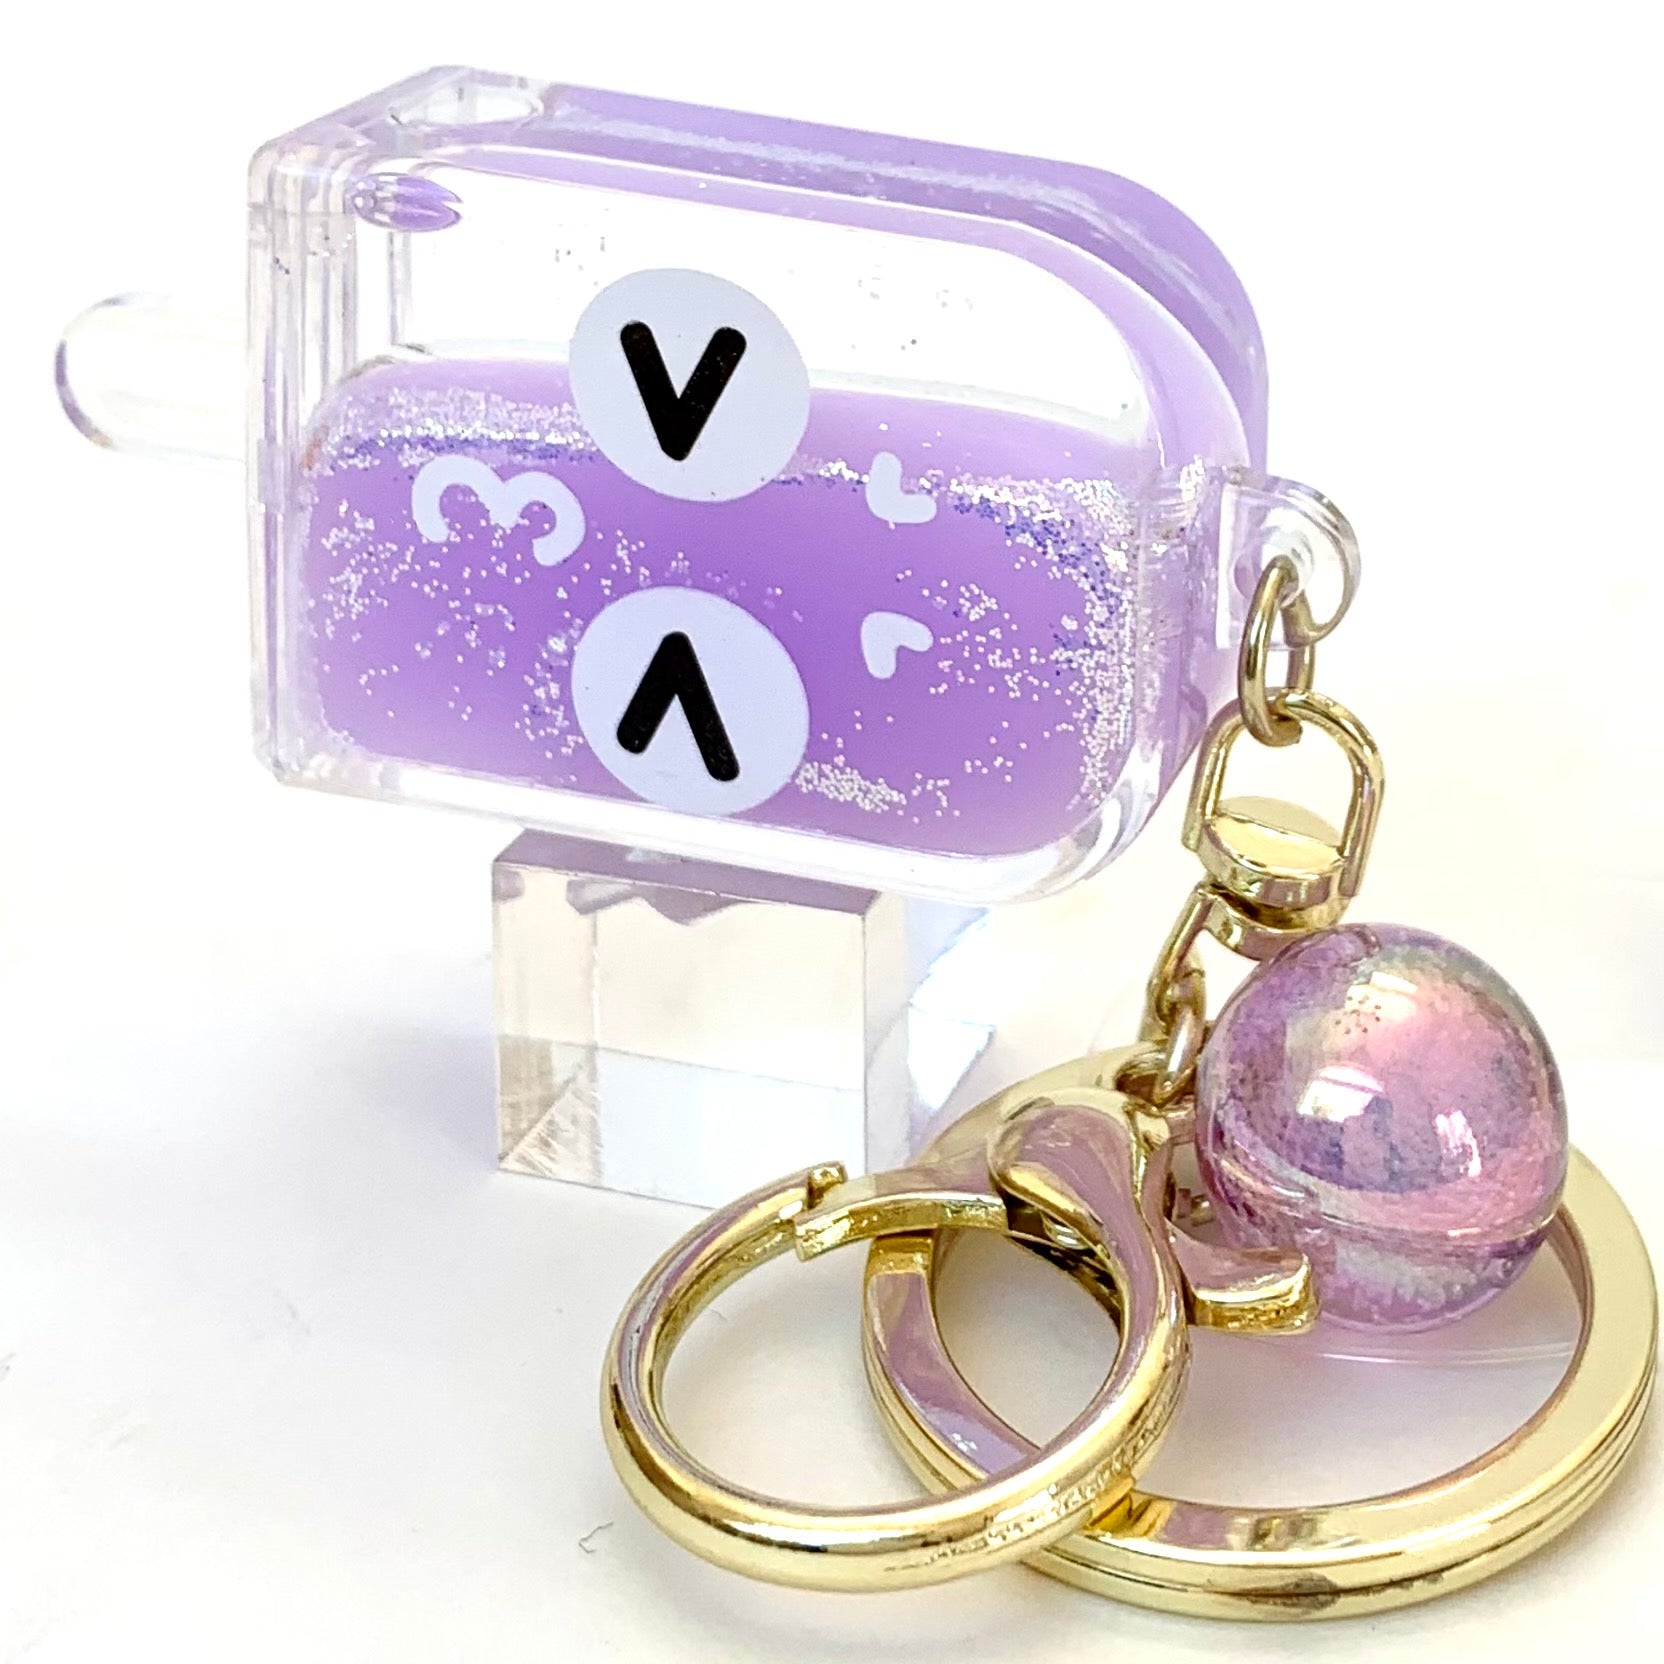 Custom Zodiac + Initial Sign Lip Gloss Keychain – Boojee Customs